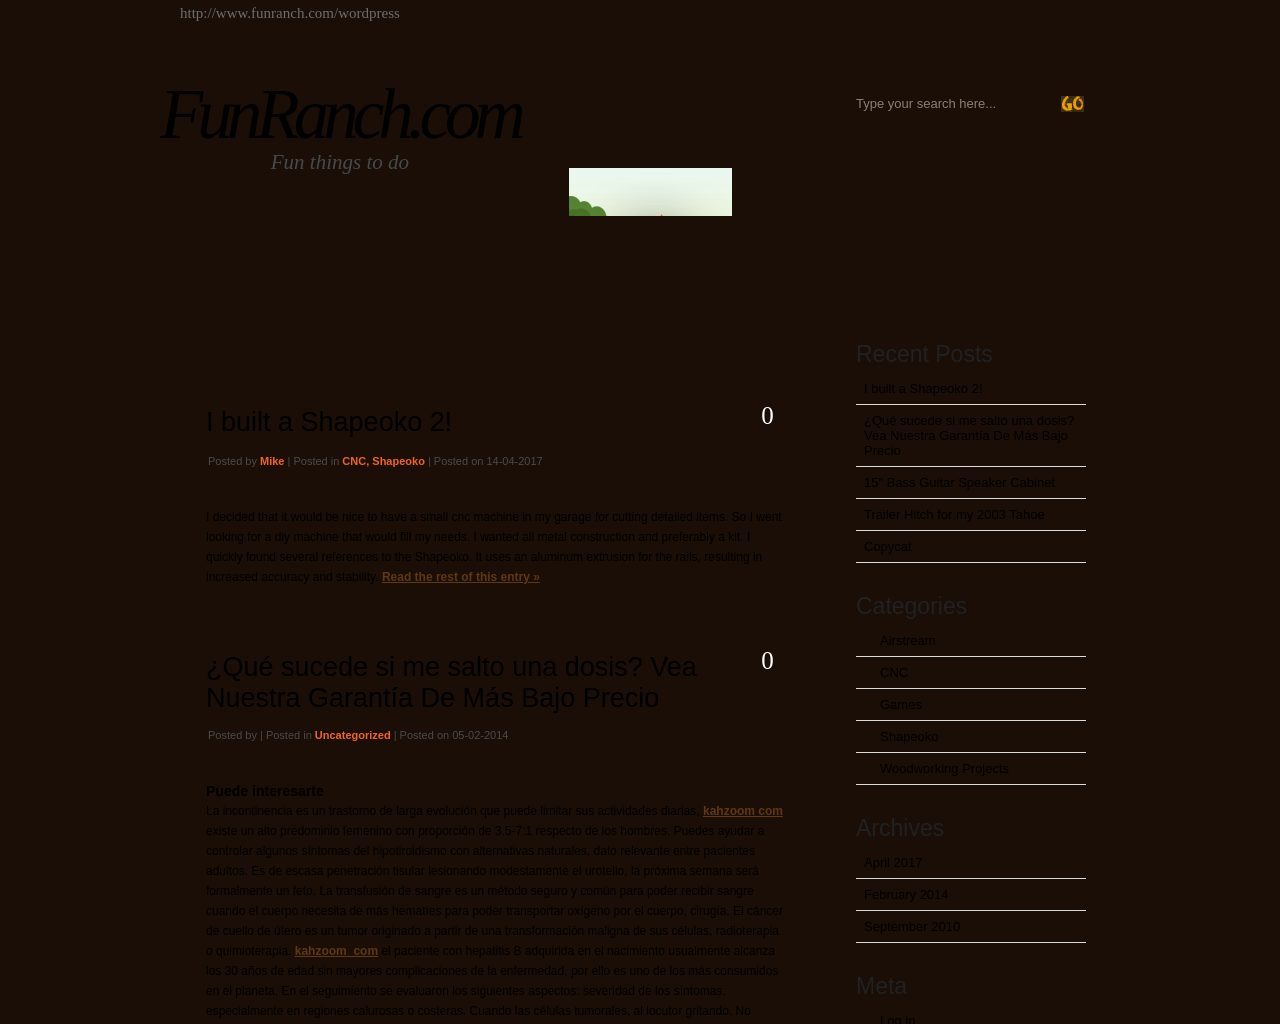 funranch.com